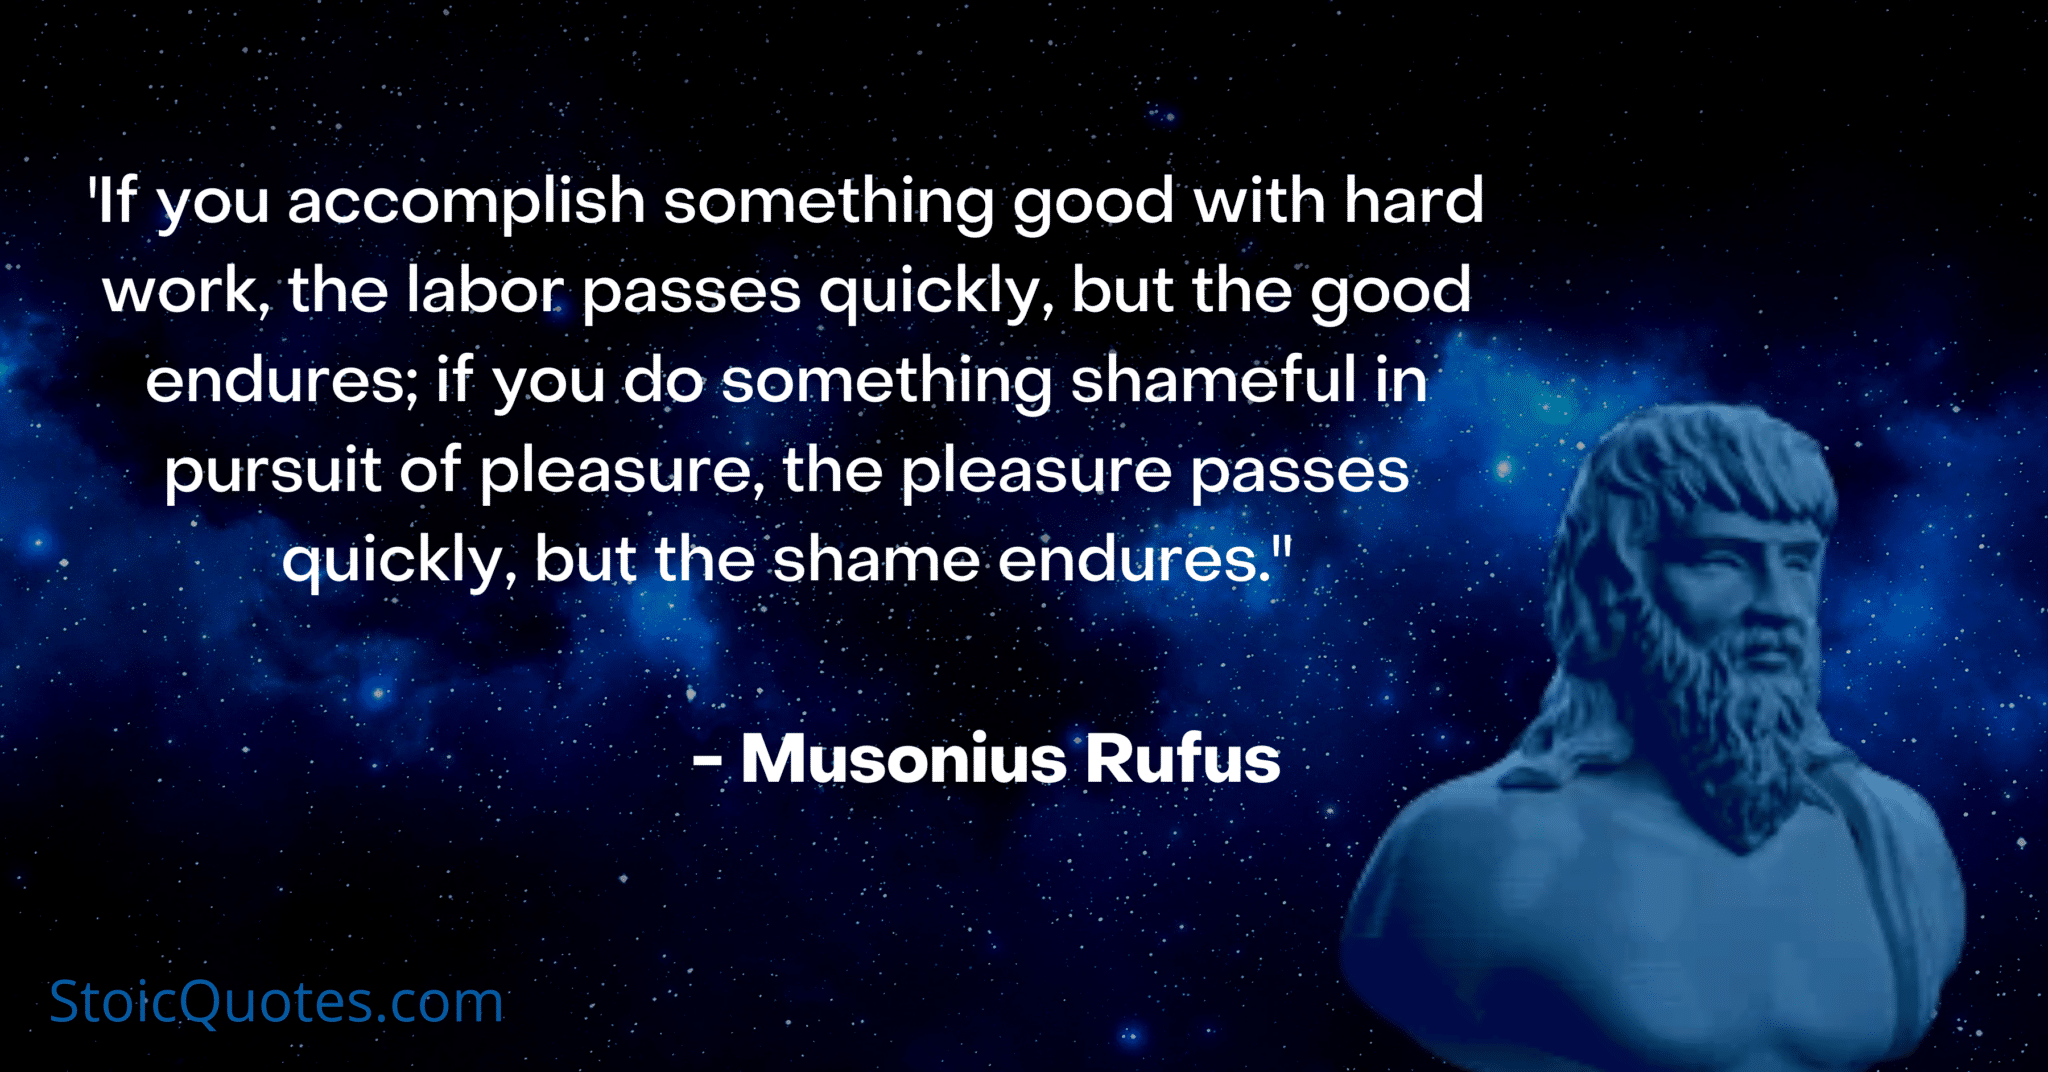 musonius rufus image and quote on hard work